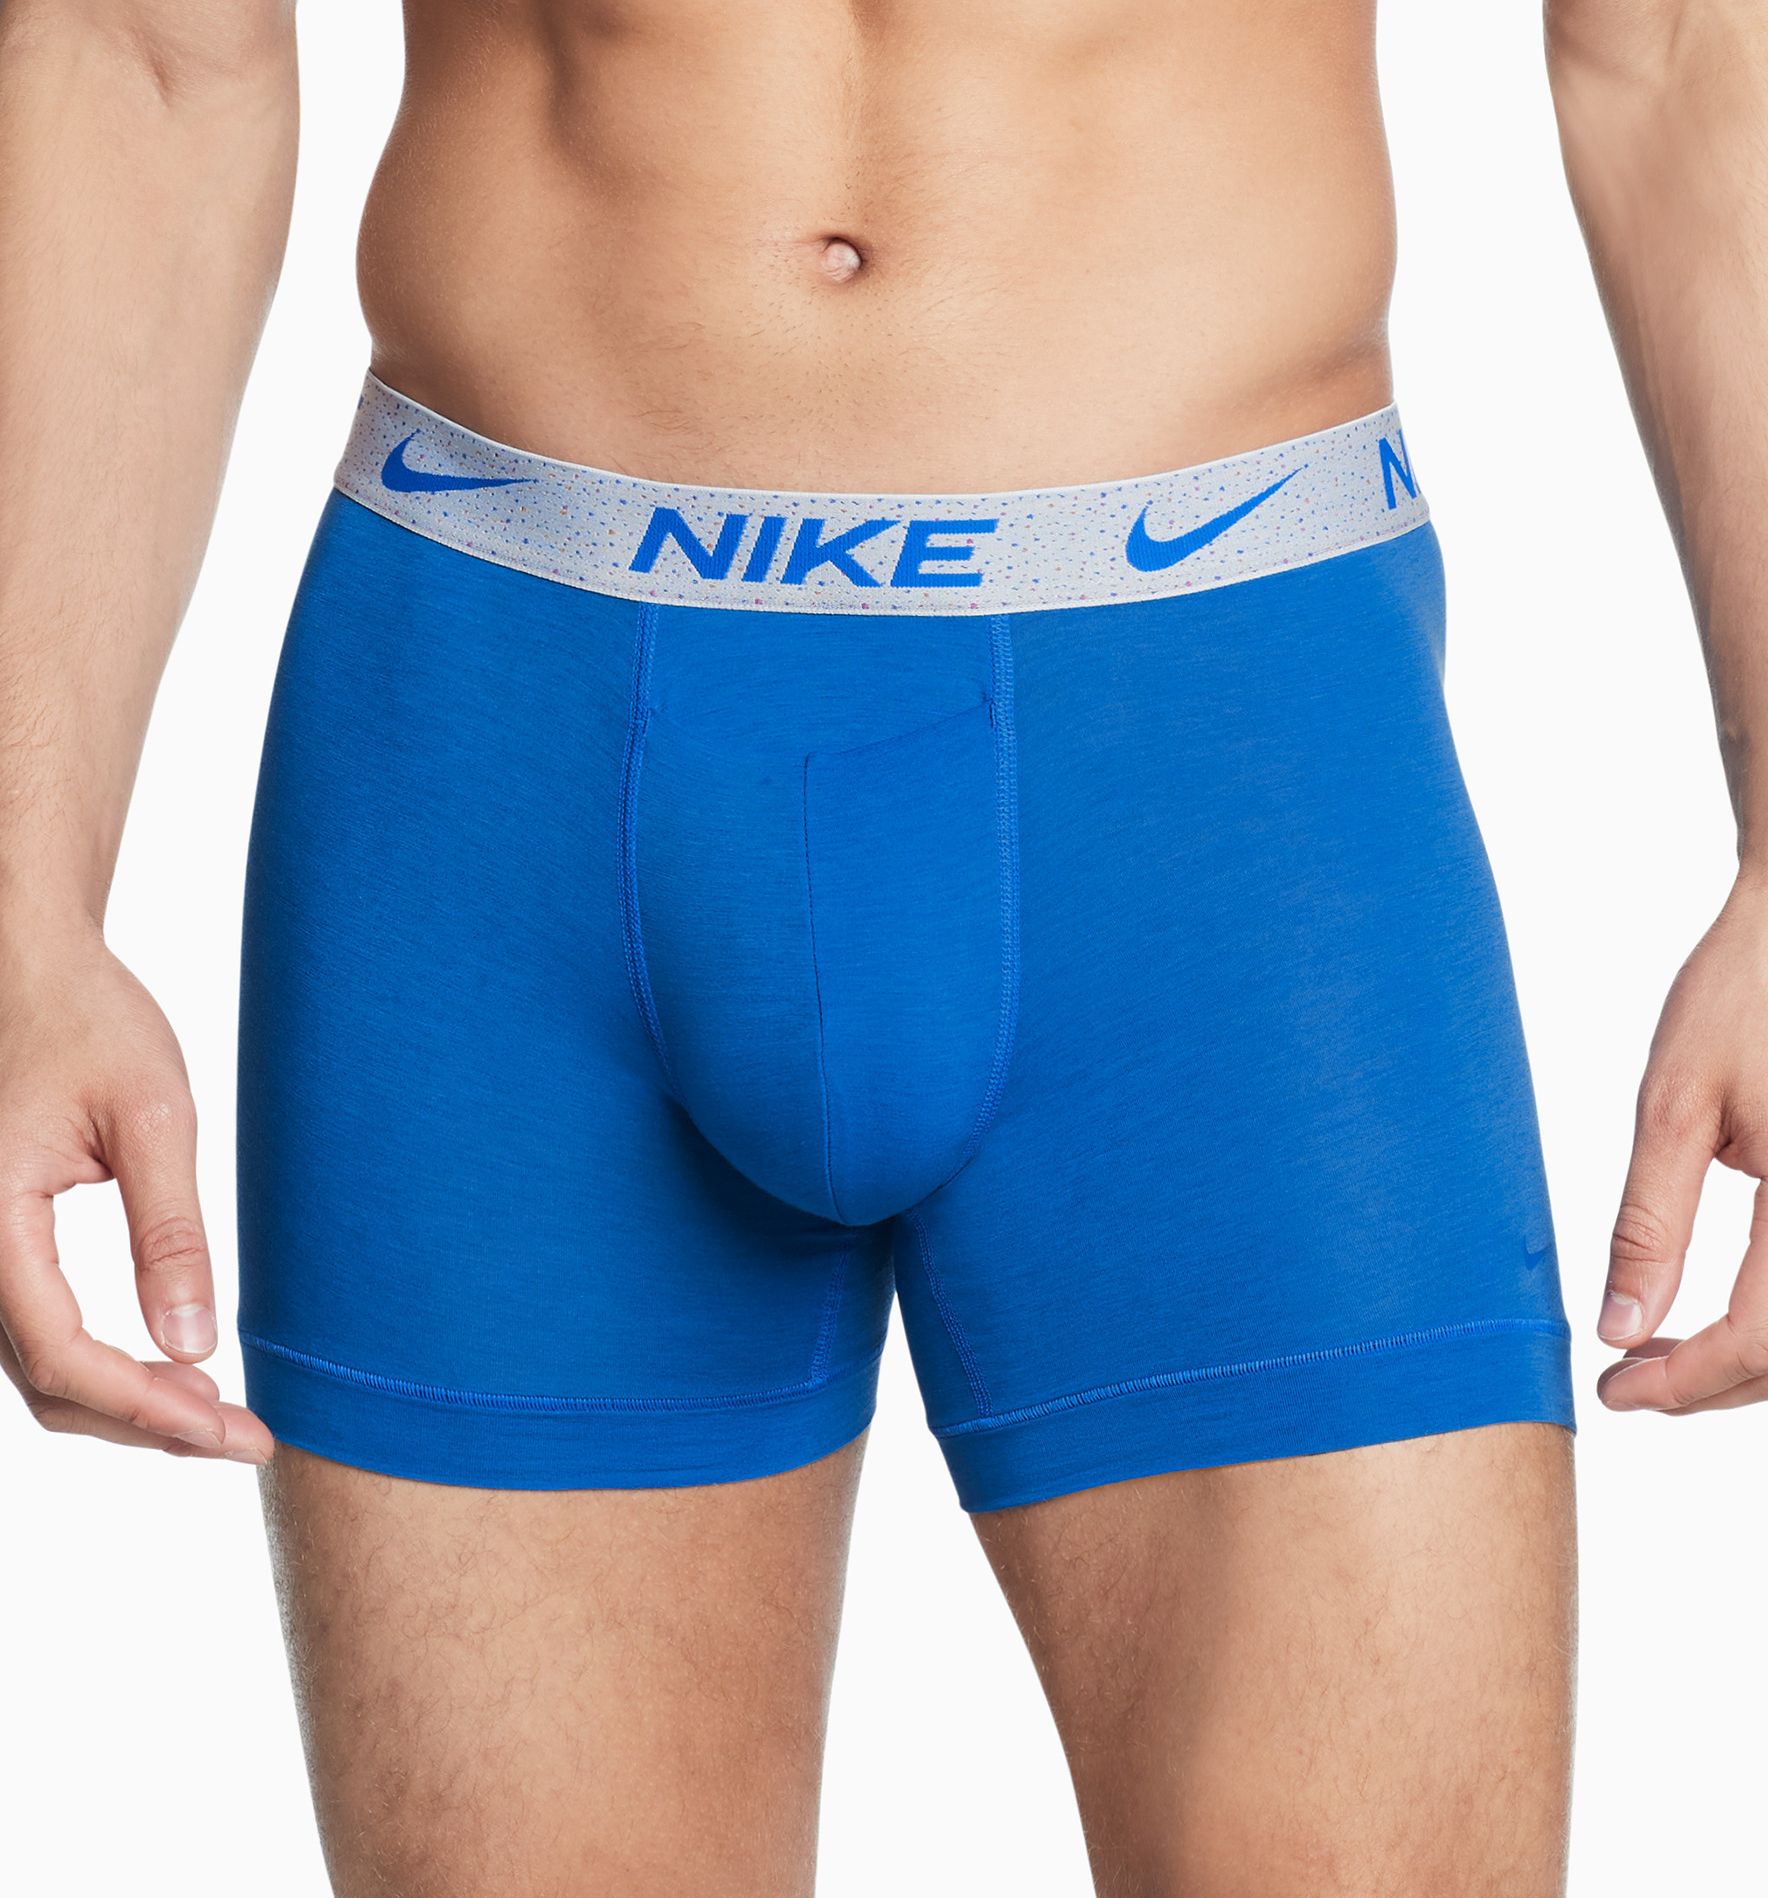 Antony Morato Men's Underwear ⋆ Men's Designer Boxers and Briefs